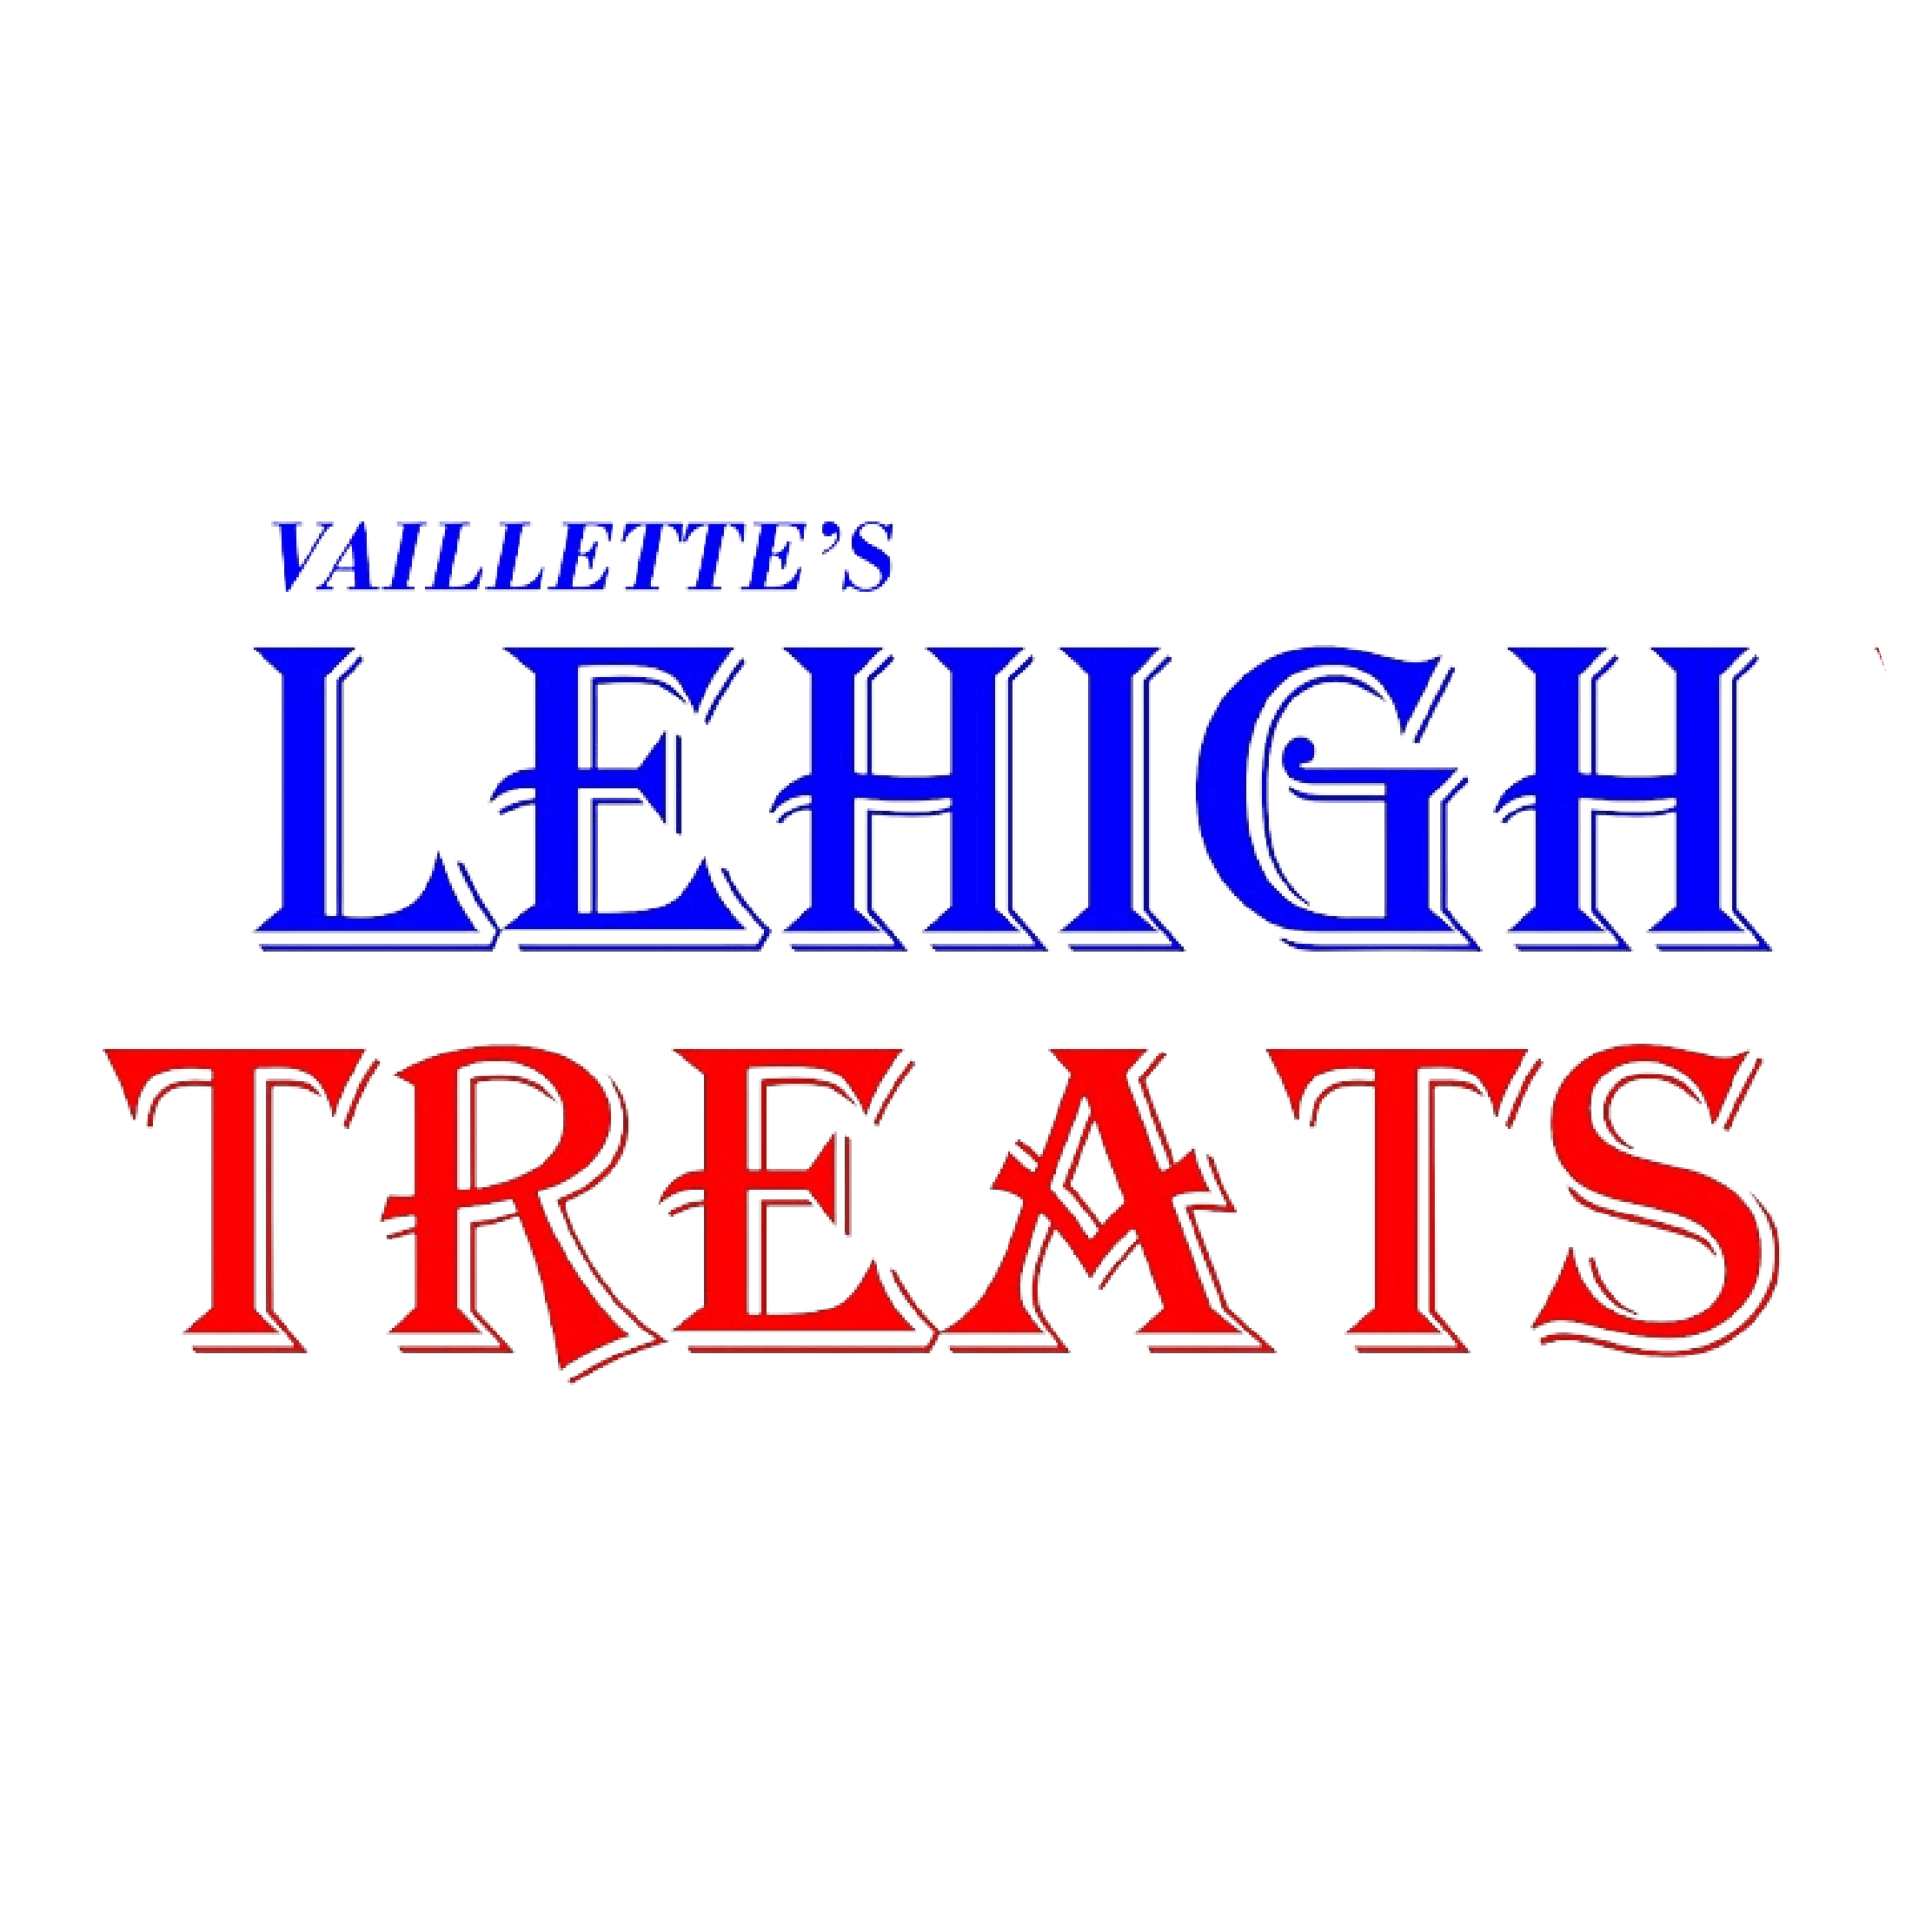 Vaillette's Lehigh Treats LLC